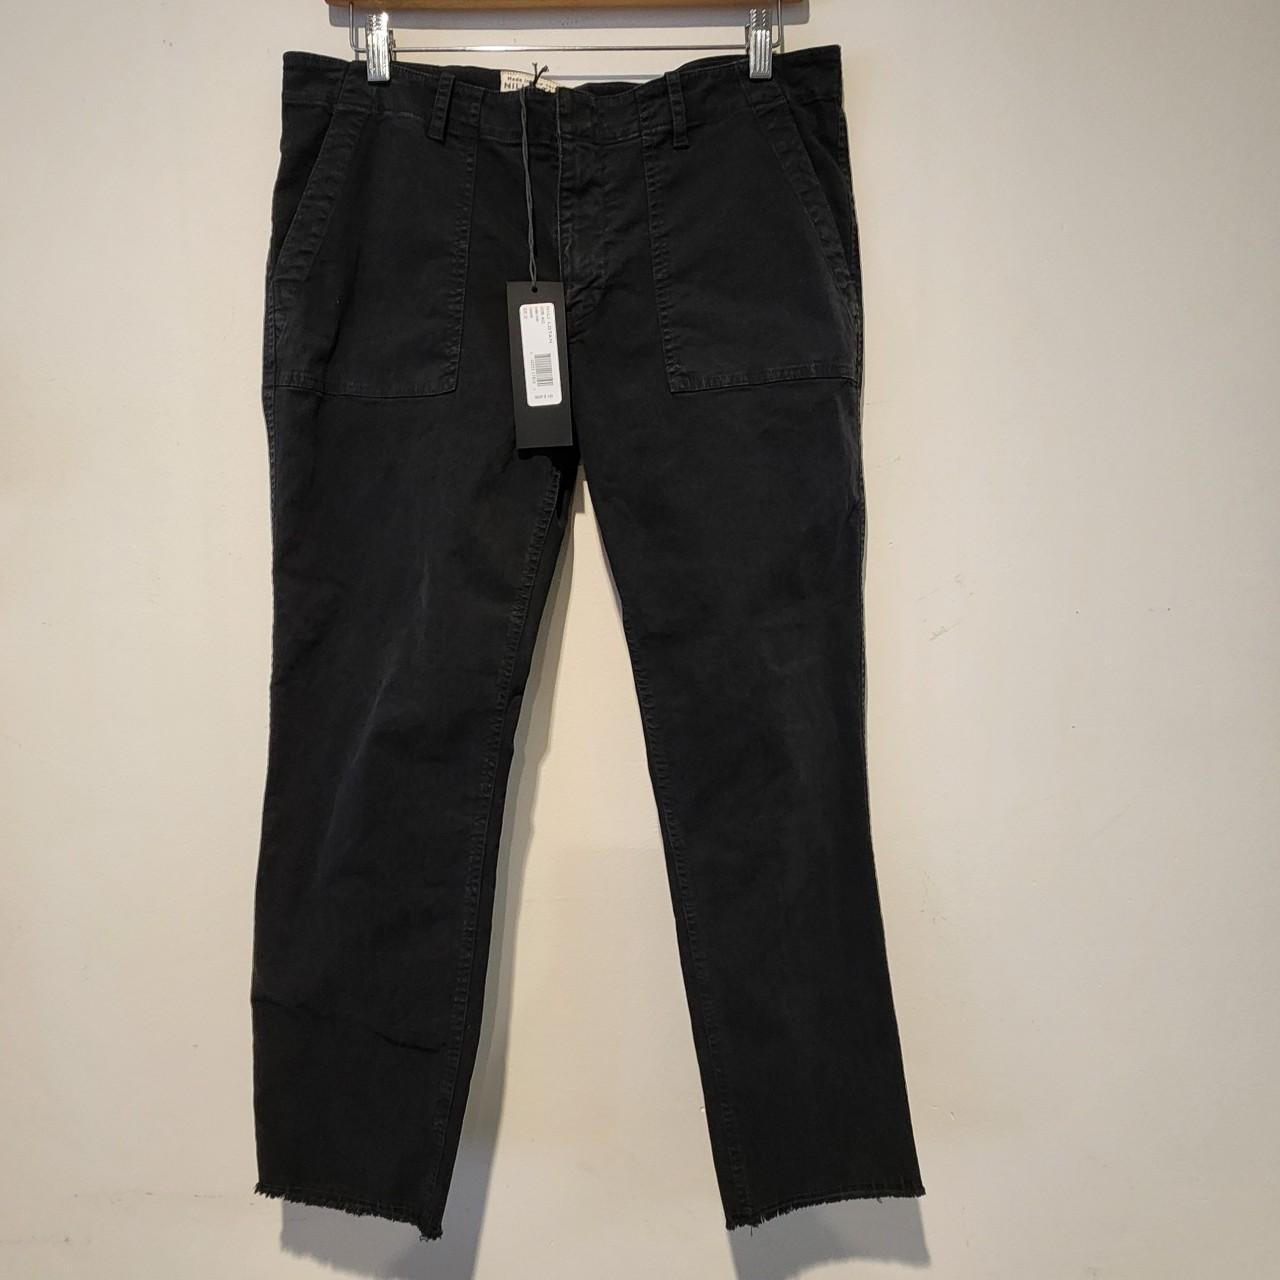 Carbon Black Raw Denim Jeans Black, Gents Denim Pants, मेन डेनिम जीन्स -  Oranges Shopi Private Limited, Surat | ID: 2849325298997